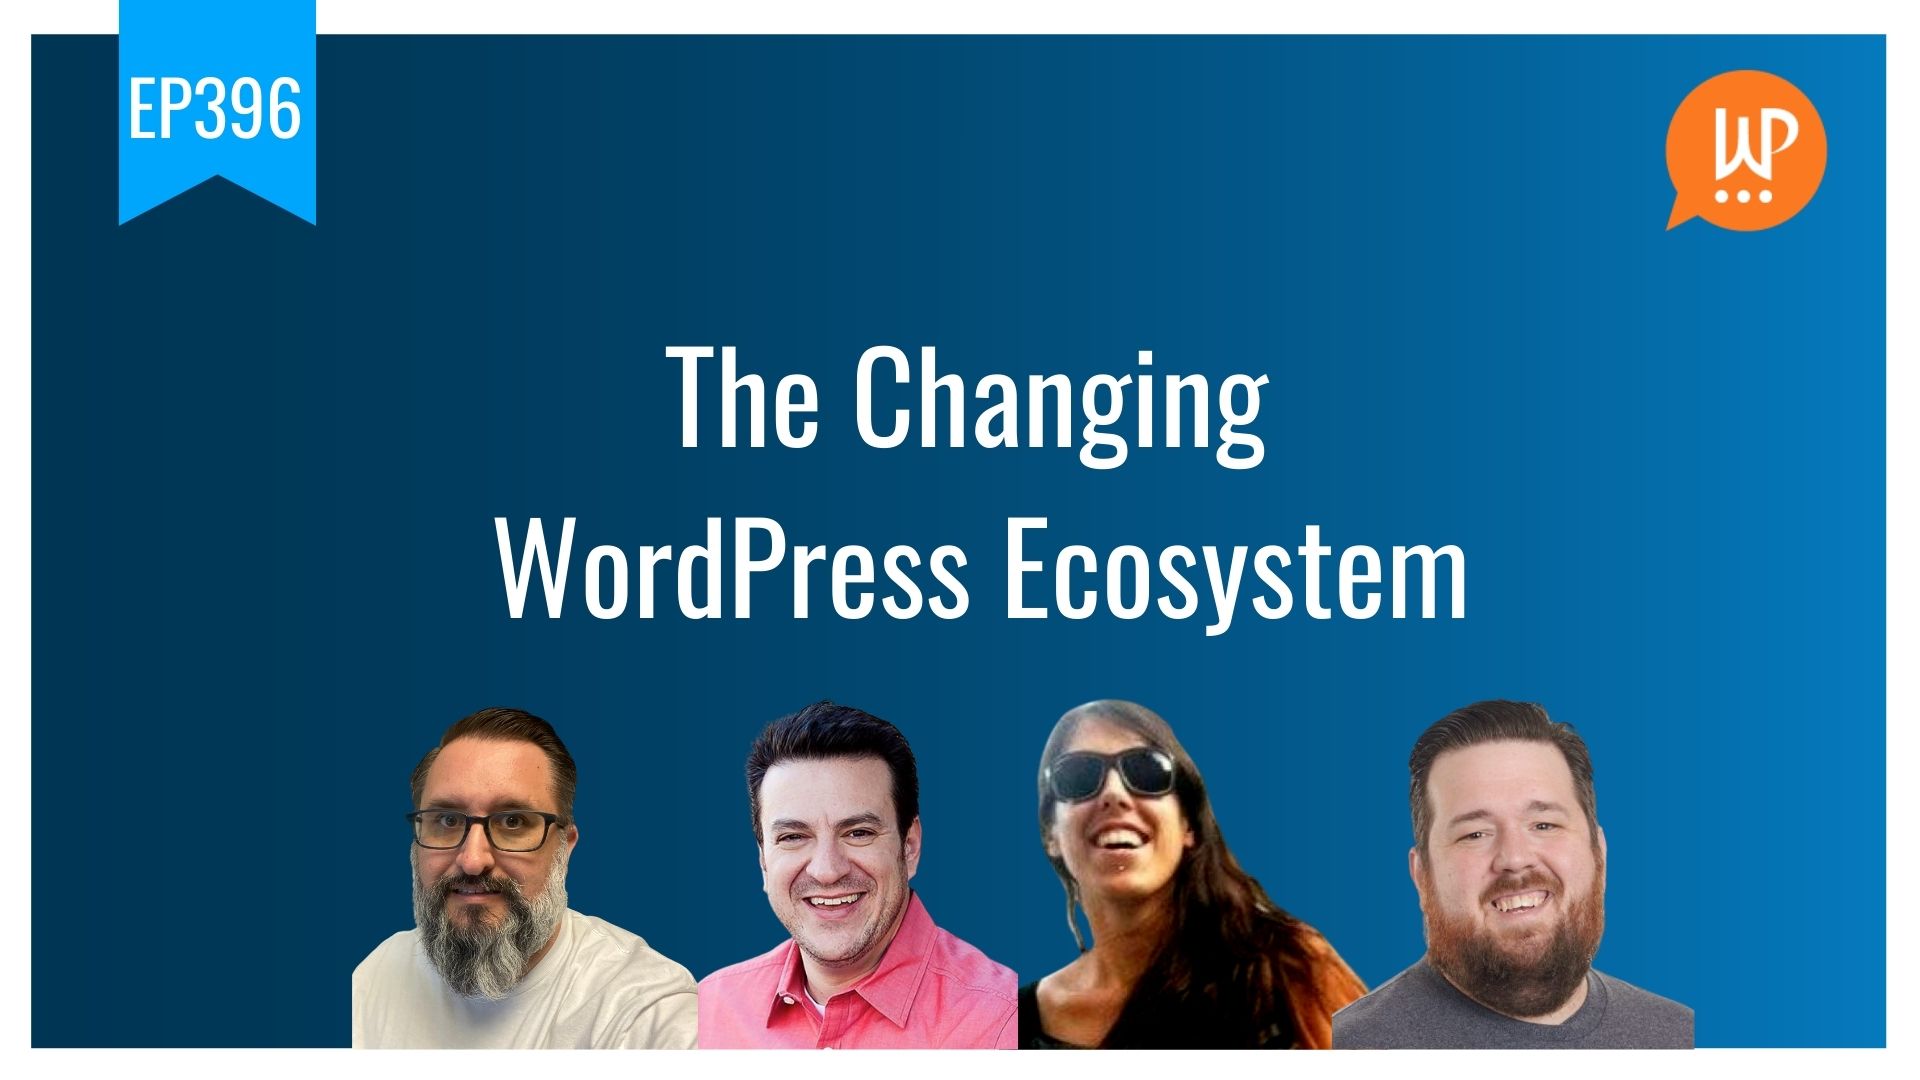 EP396 – The Changing WordPress Ecosystem